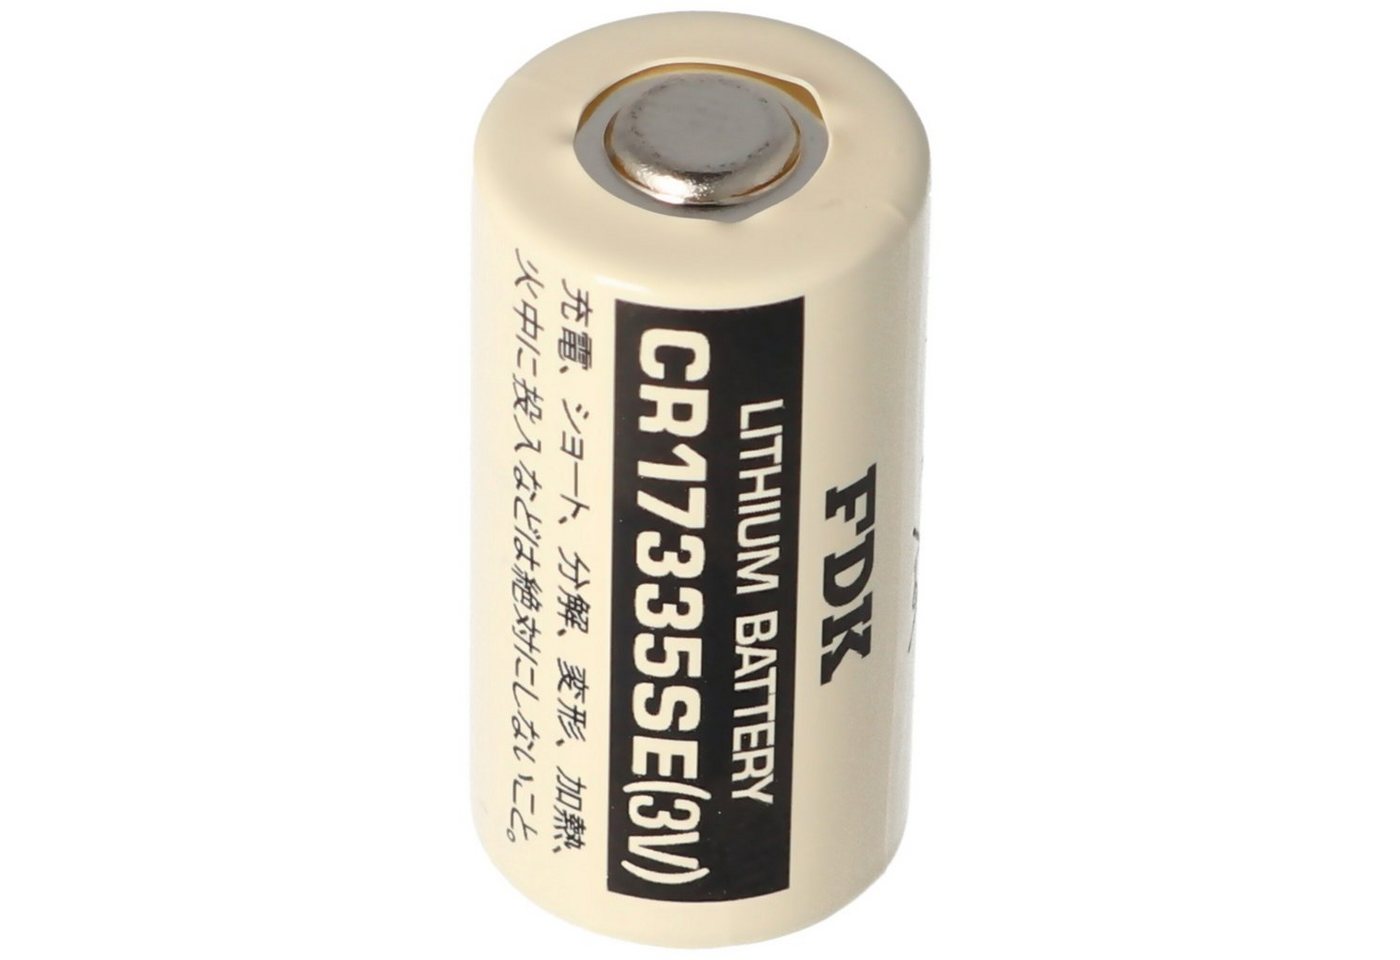 Sanyo Sanyo Lithium Batterie CR17335 SE Size 2/3A, ohne Lötfahnen CR17335SE Batterie, (3,0 V) von Sanyo